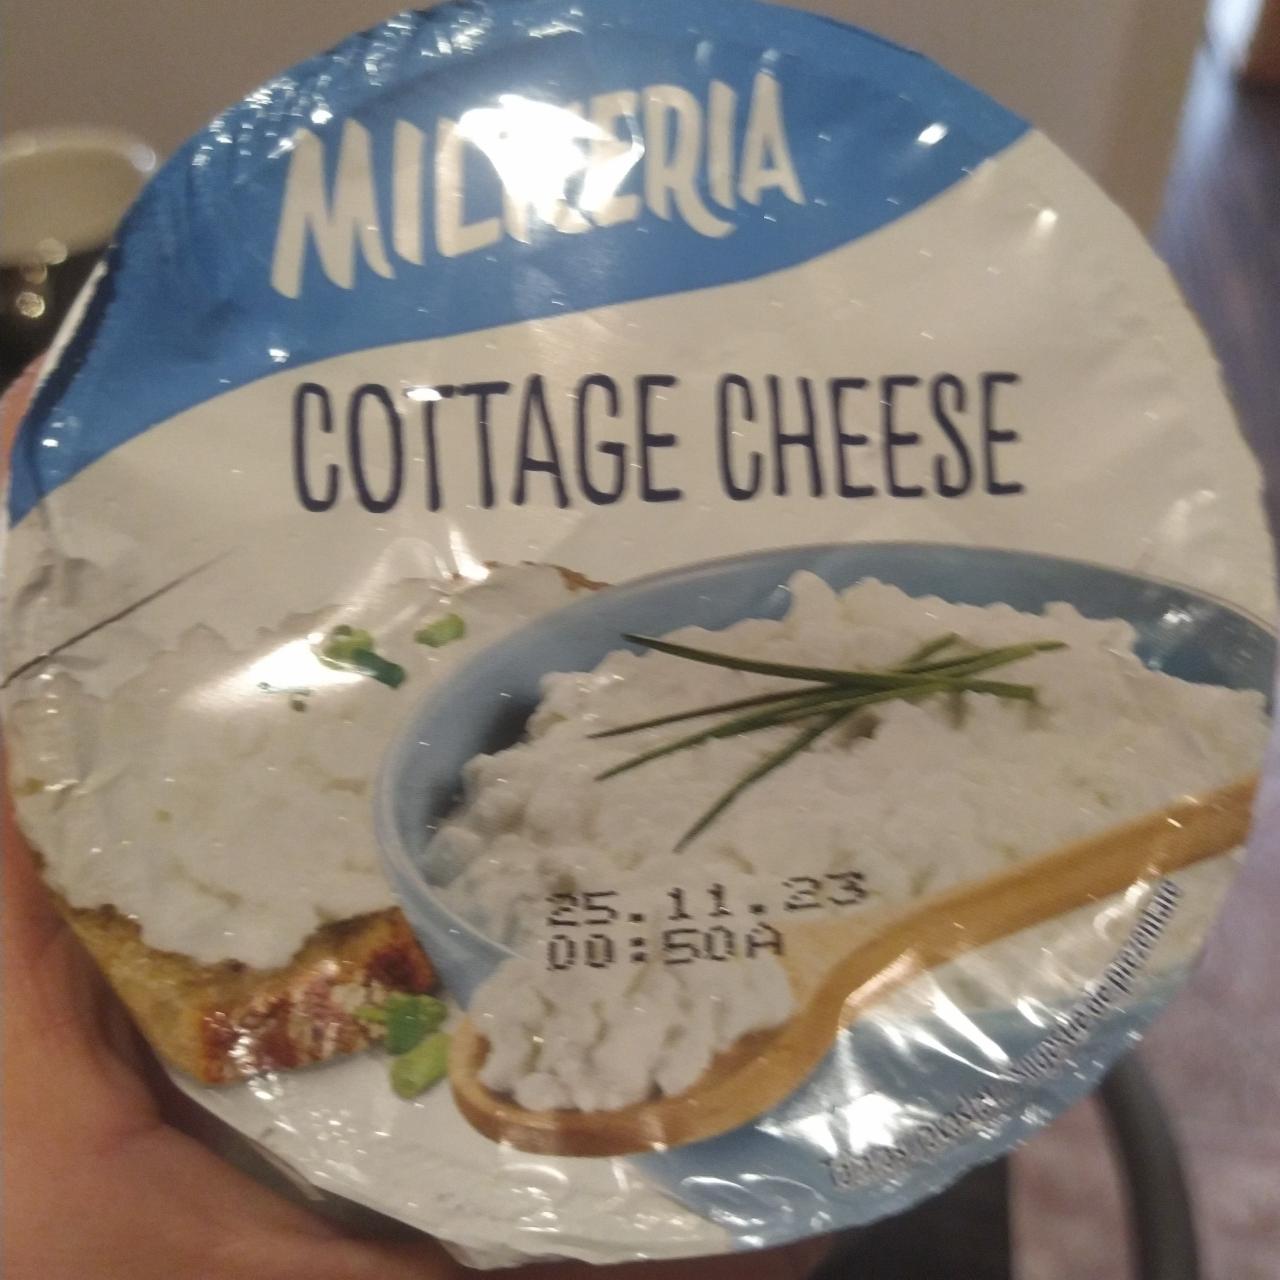 Képek - Cottage Cheese Milkeria